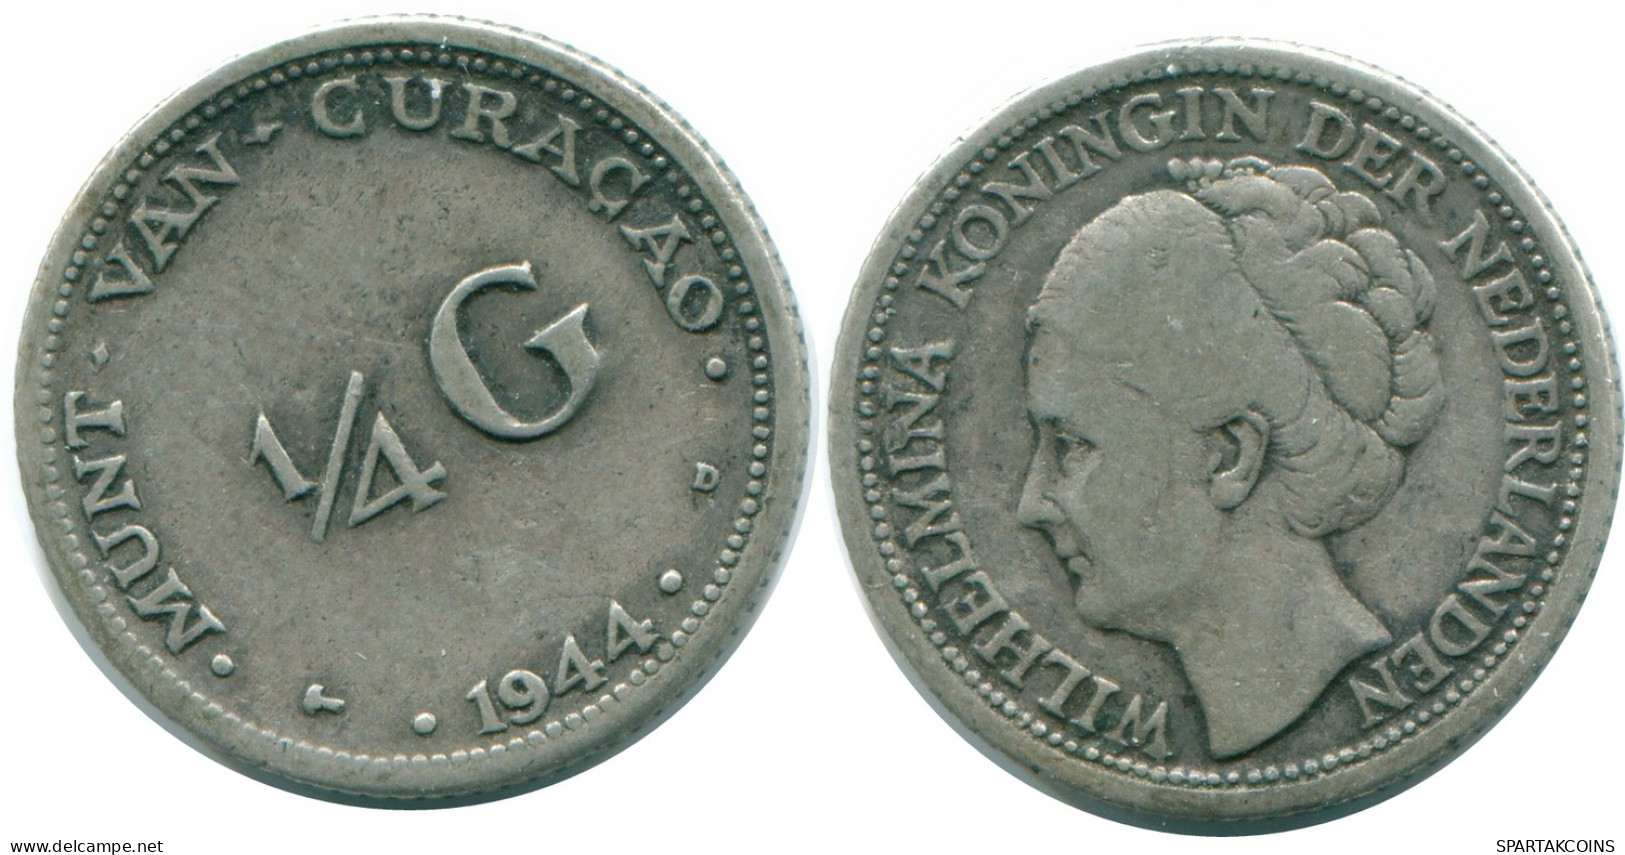 1/4 GULDEN 1944 CURACAO Netherlands SILVER Colonial Coin #NL10679.4.U - Curacao